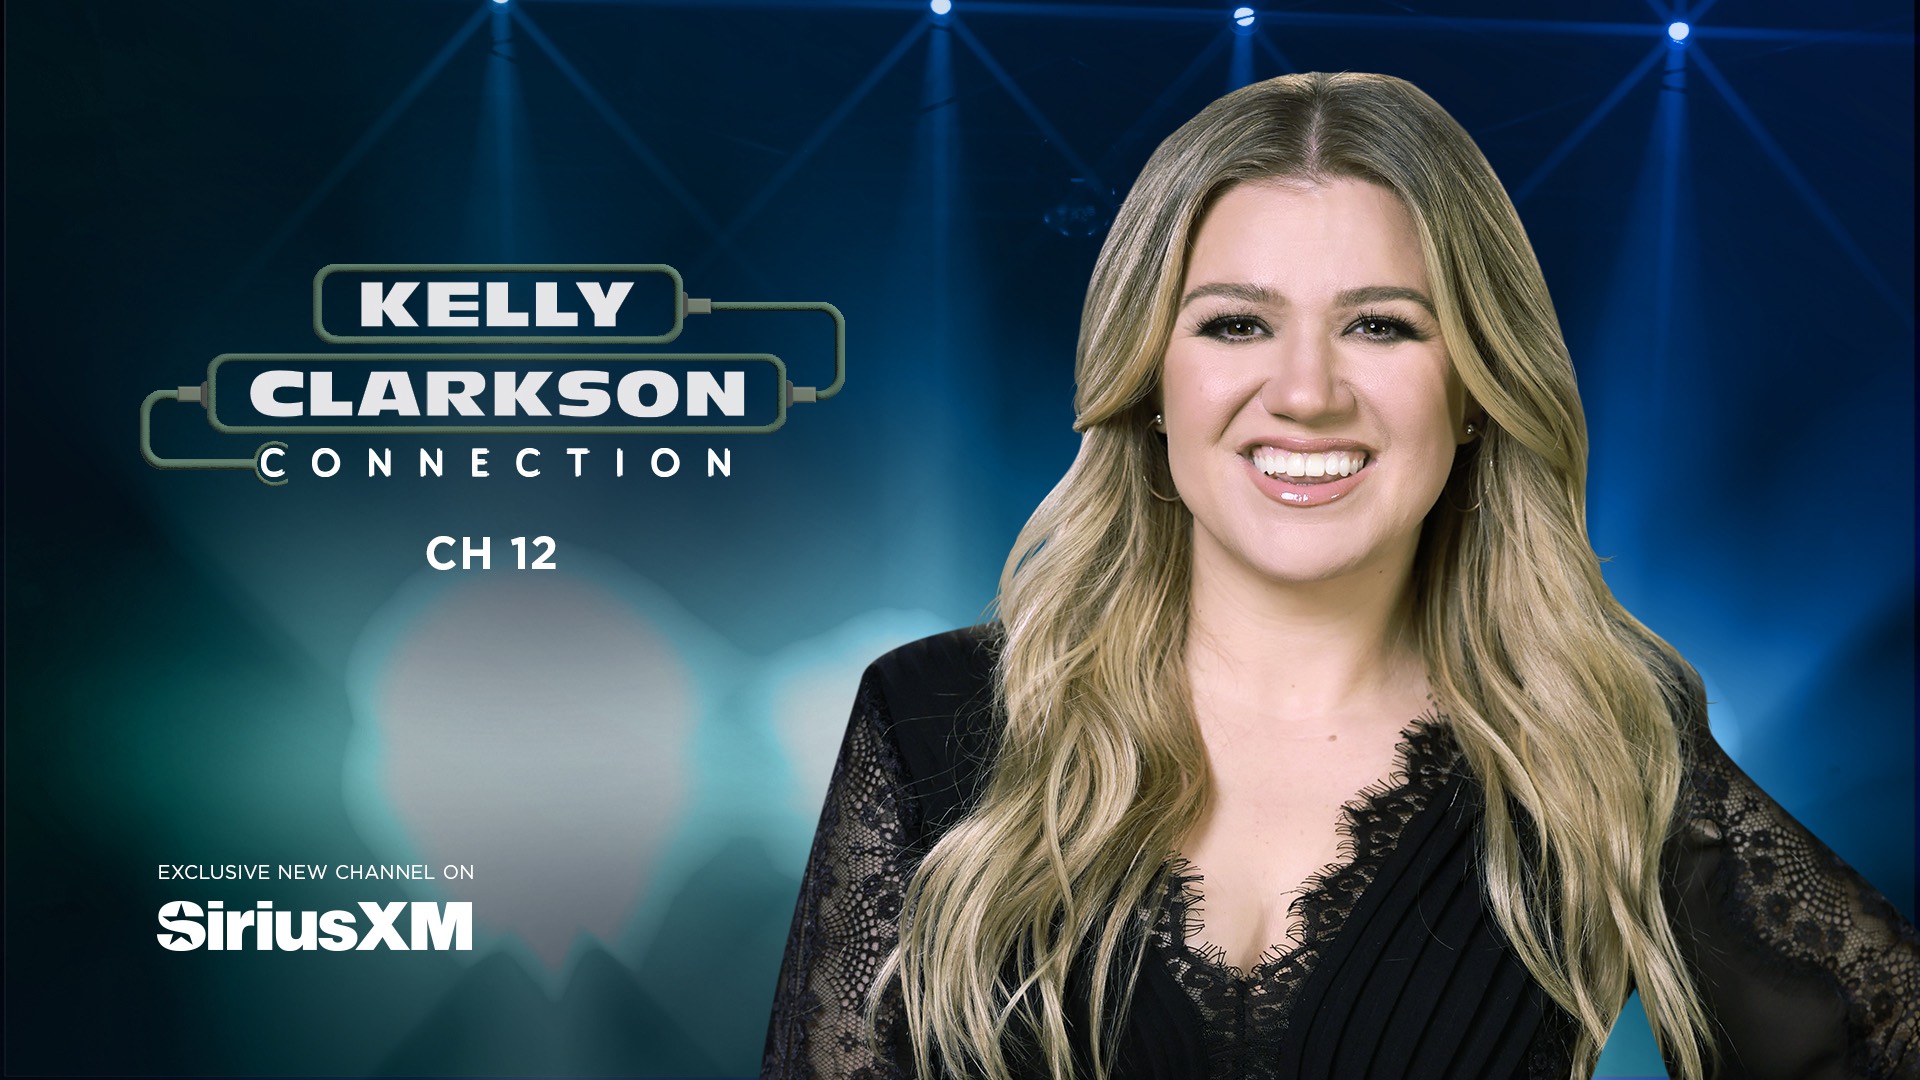 Kelly Clarkson Connection on SiriusXM